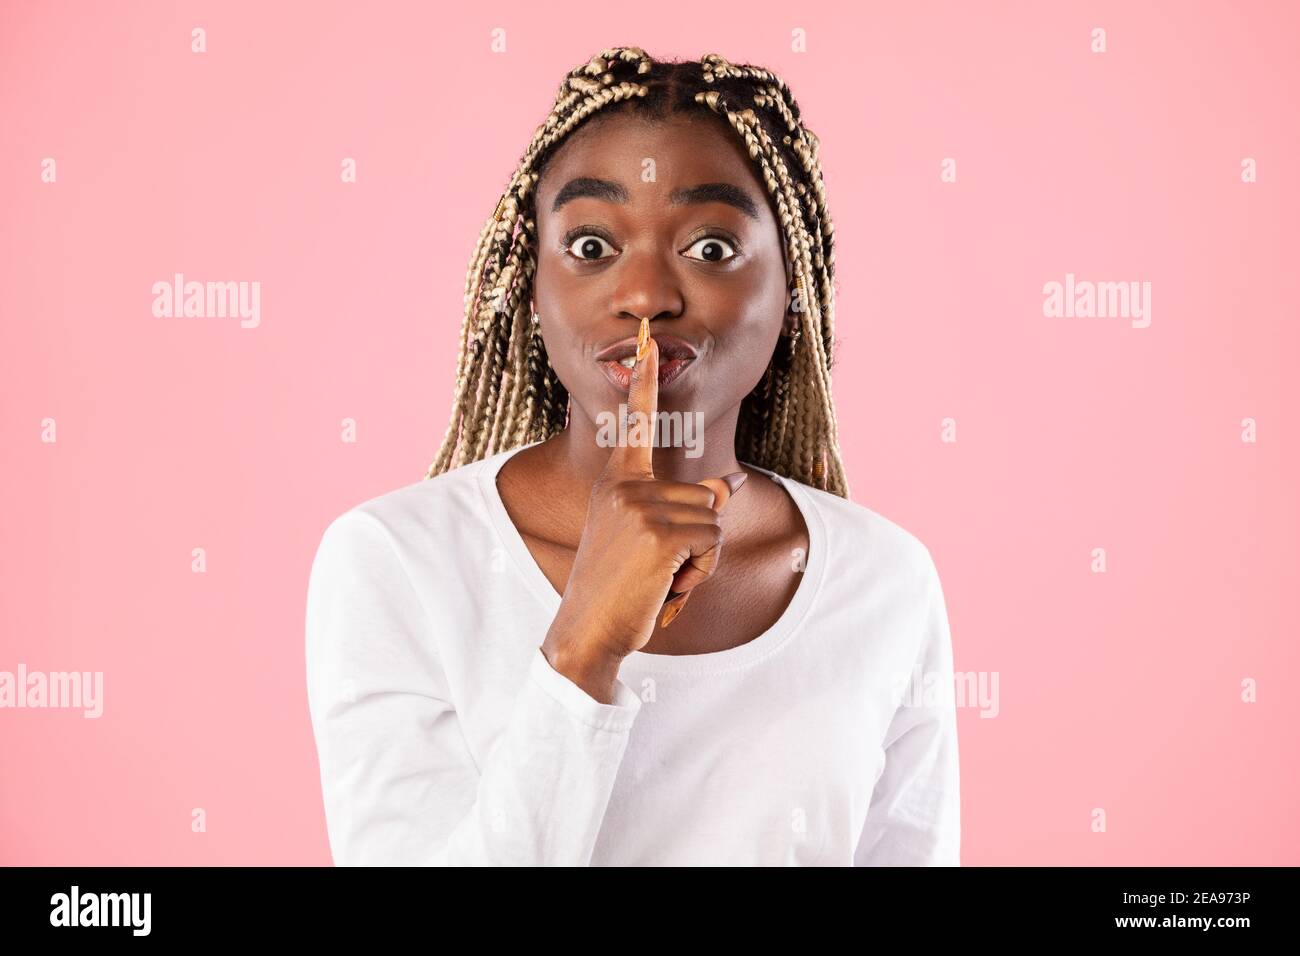 Black woman puting finger on lips, making hush sign Stock Photo